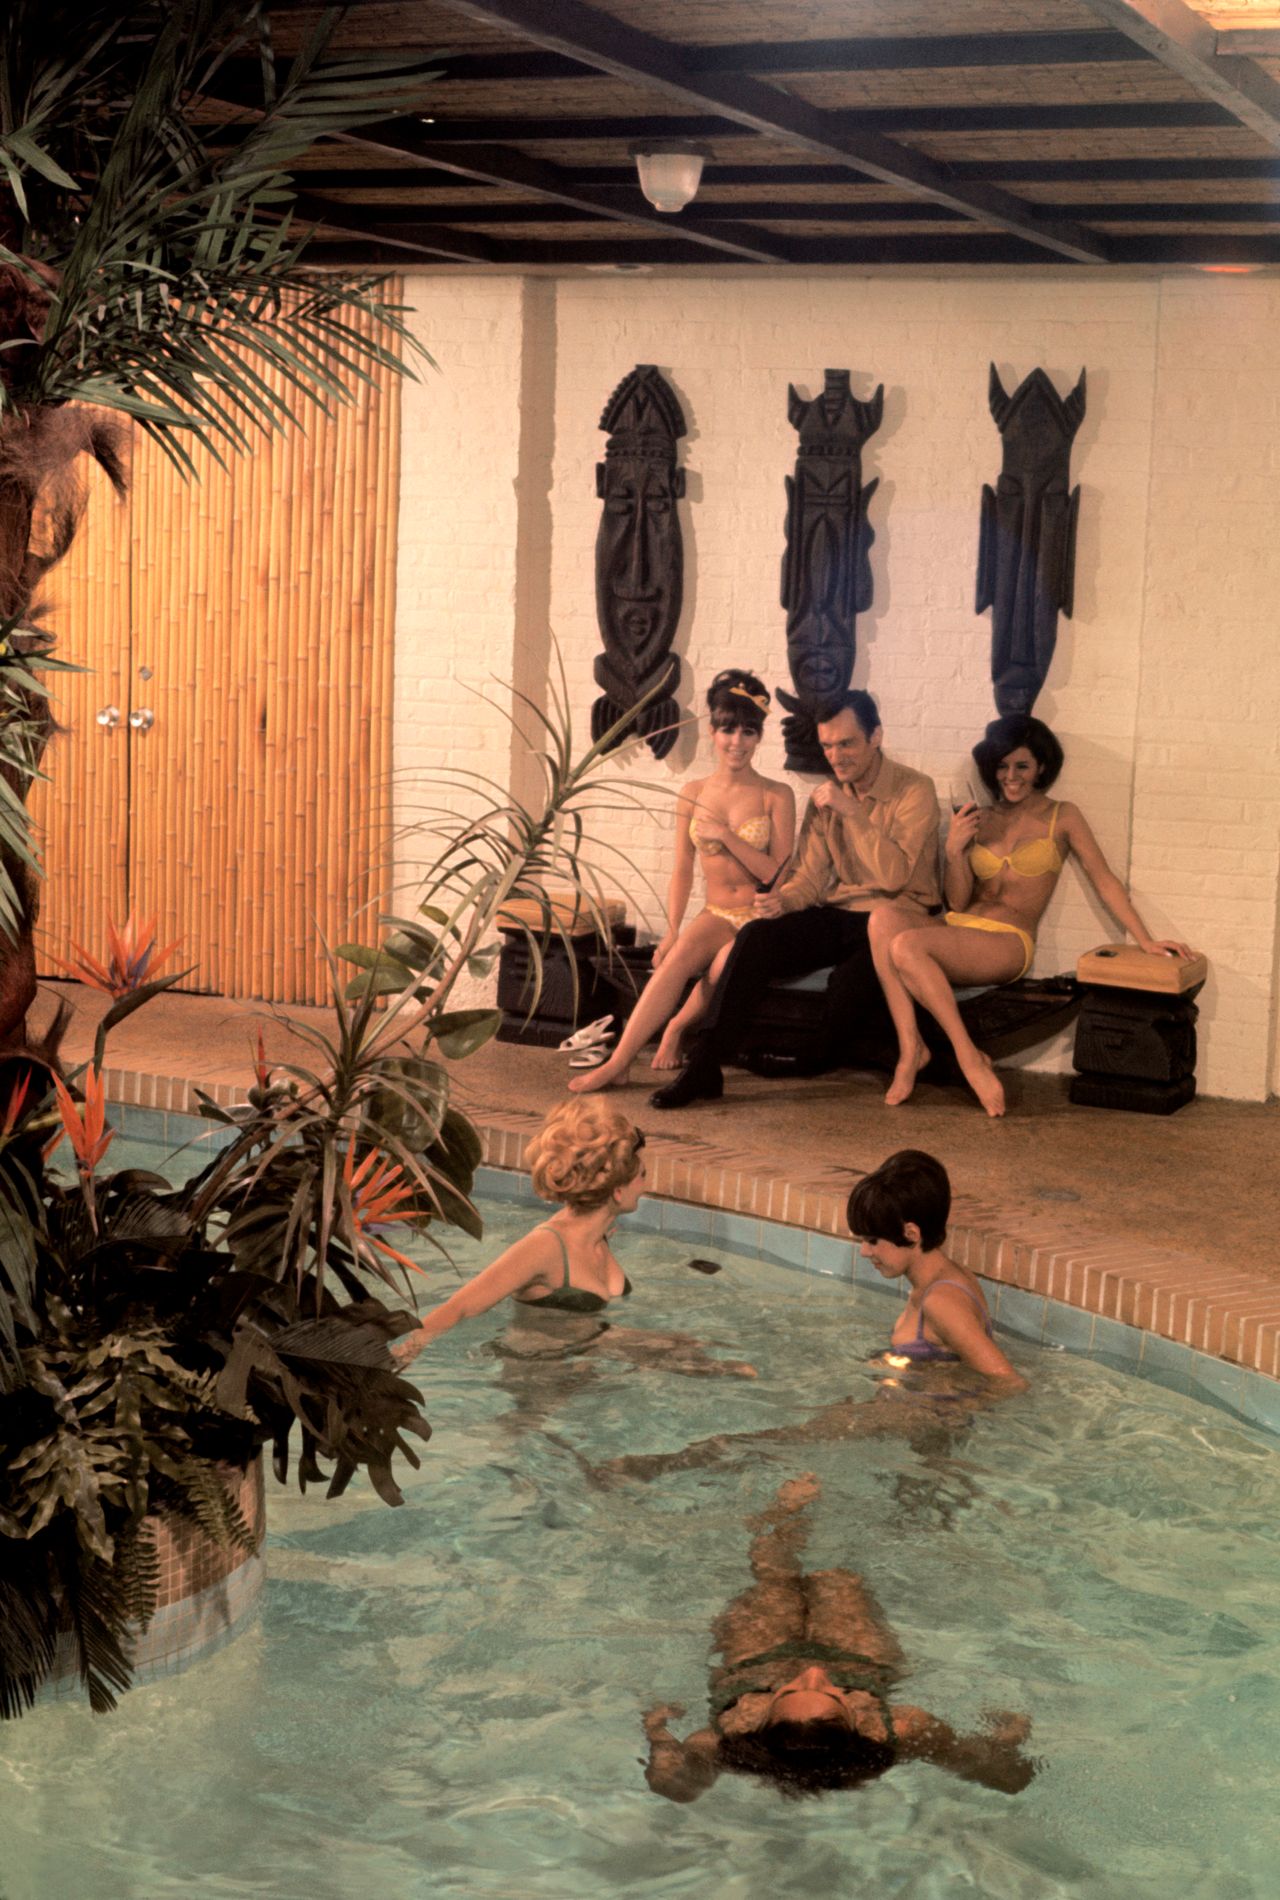 Burt Glinn, "Playboy founder, Hugh Hefner, at his mansion." Chicago, IL., USA, 1966